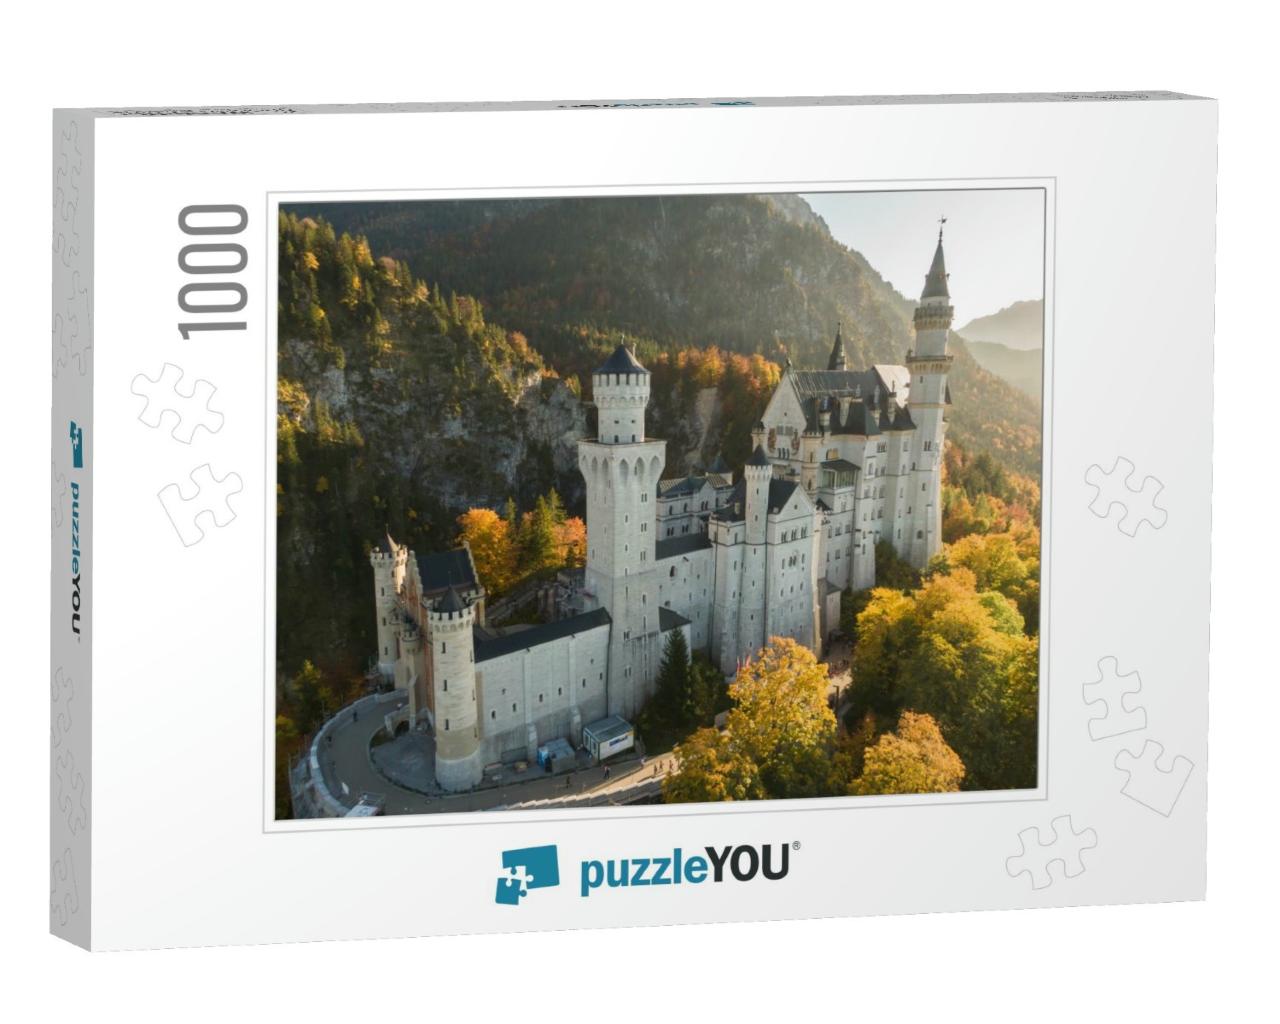 Aerial View Neuschwanstein Castle in Schwangau, Germany... Jigsaw Puzzle with 1000 pieces